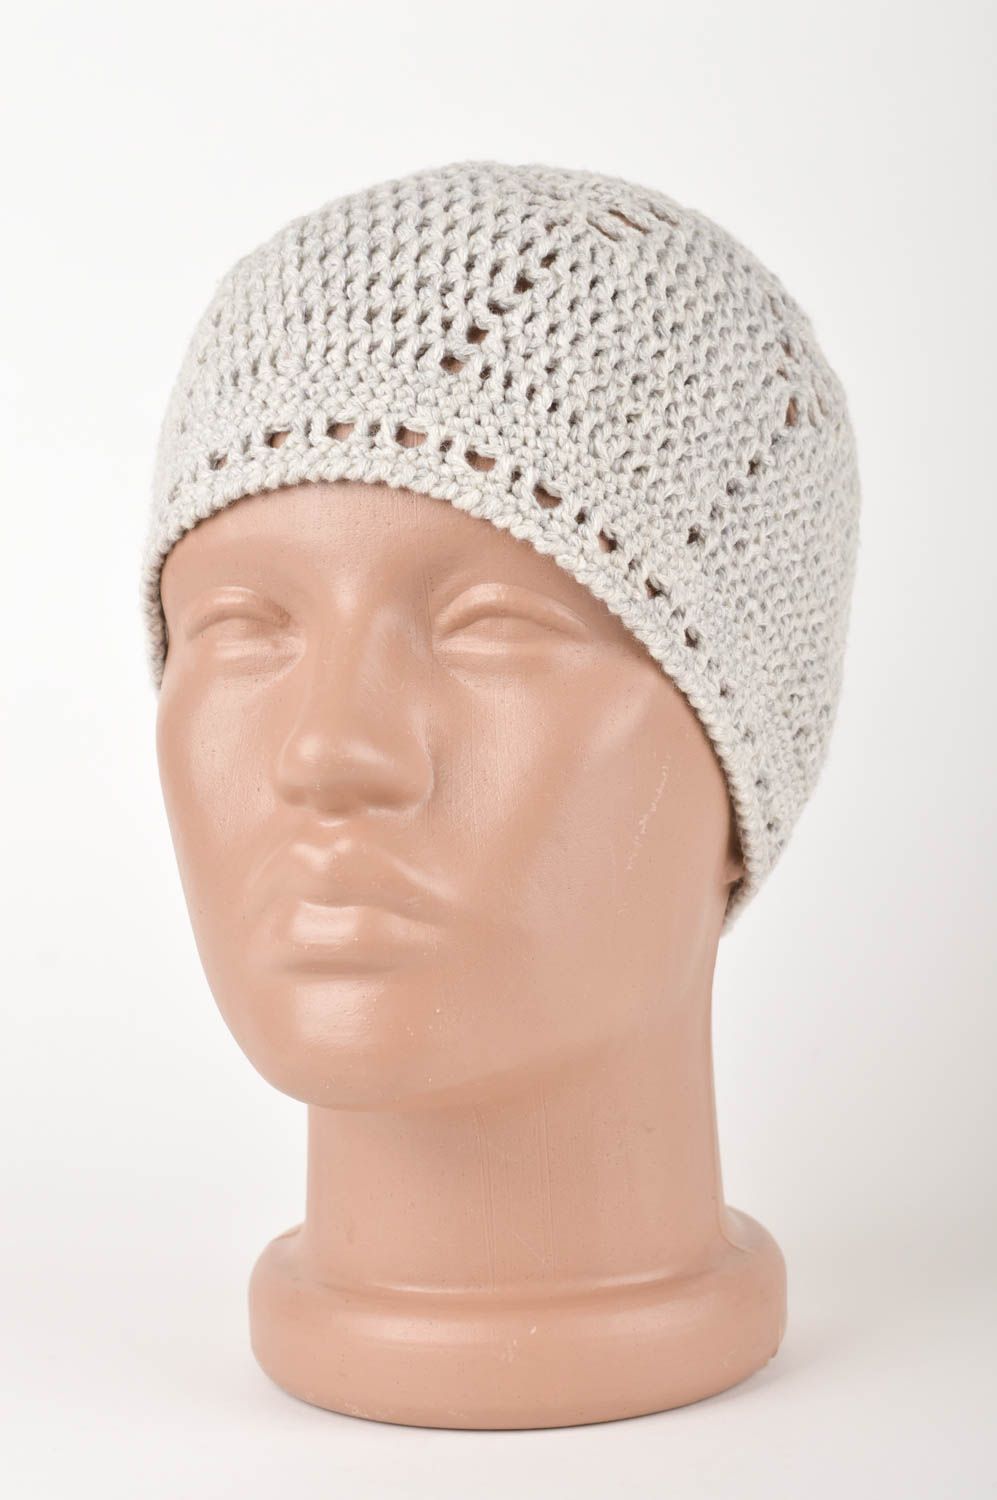 Girls hats handmade crochet hat kids accessories hats for kids gifts for girls photo 1